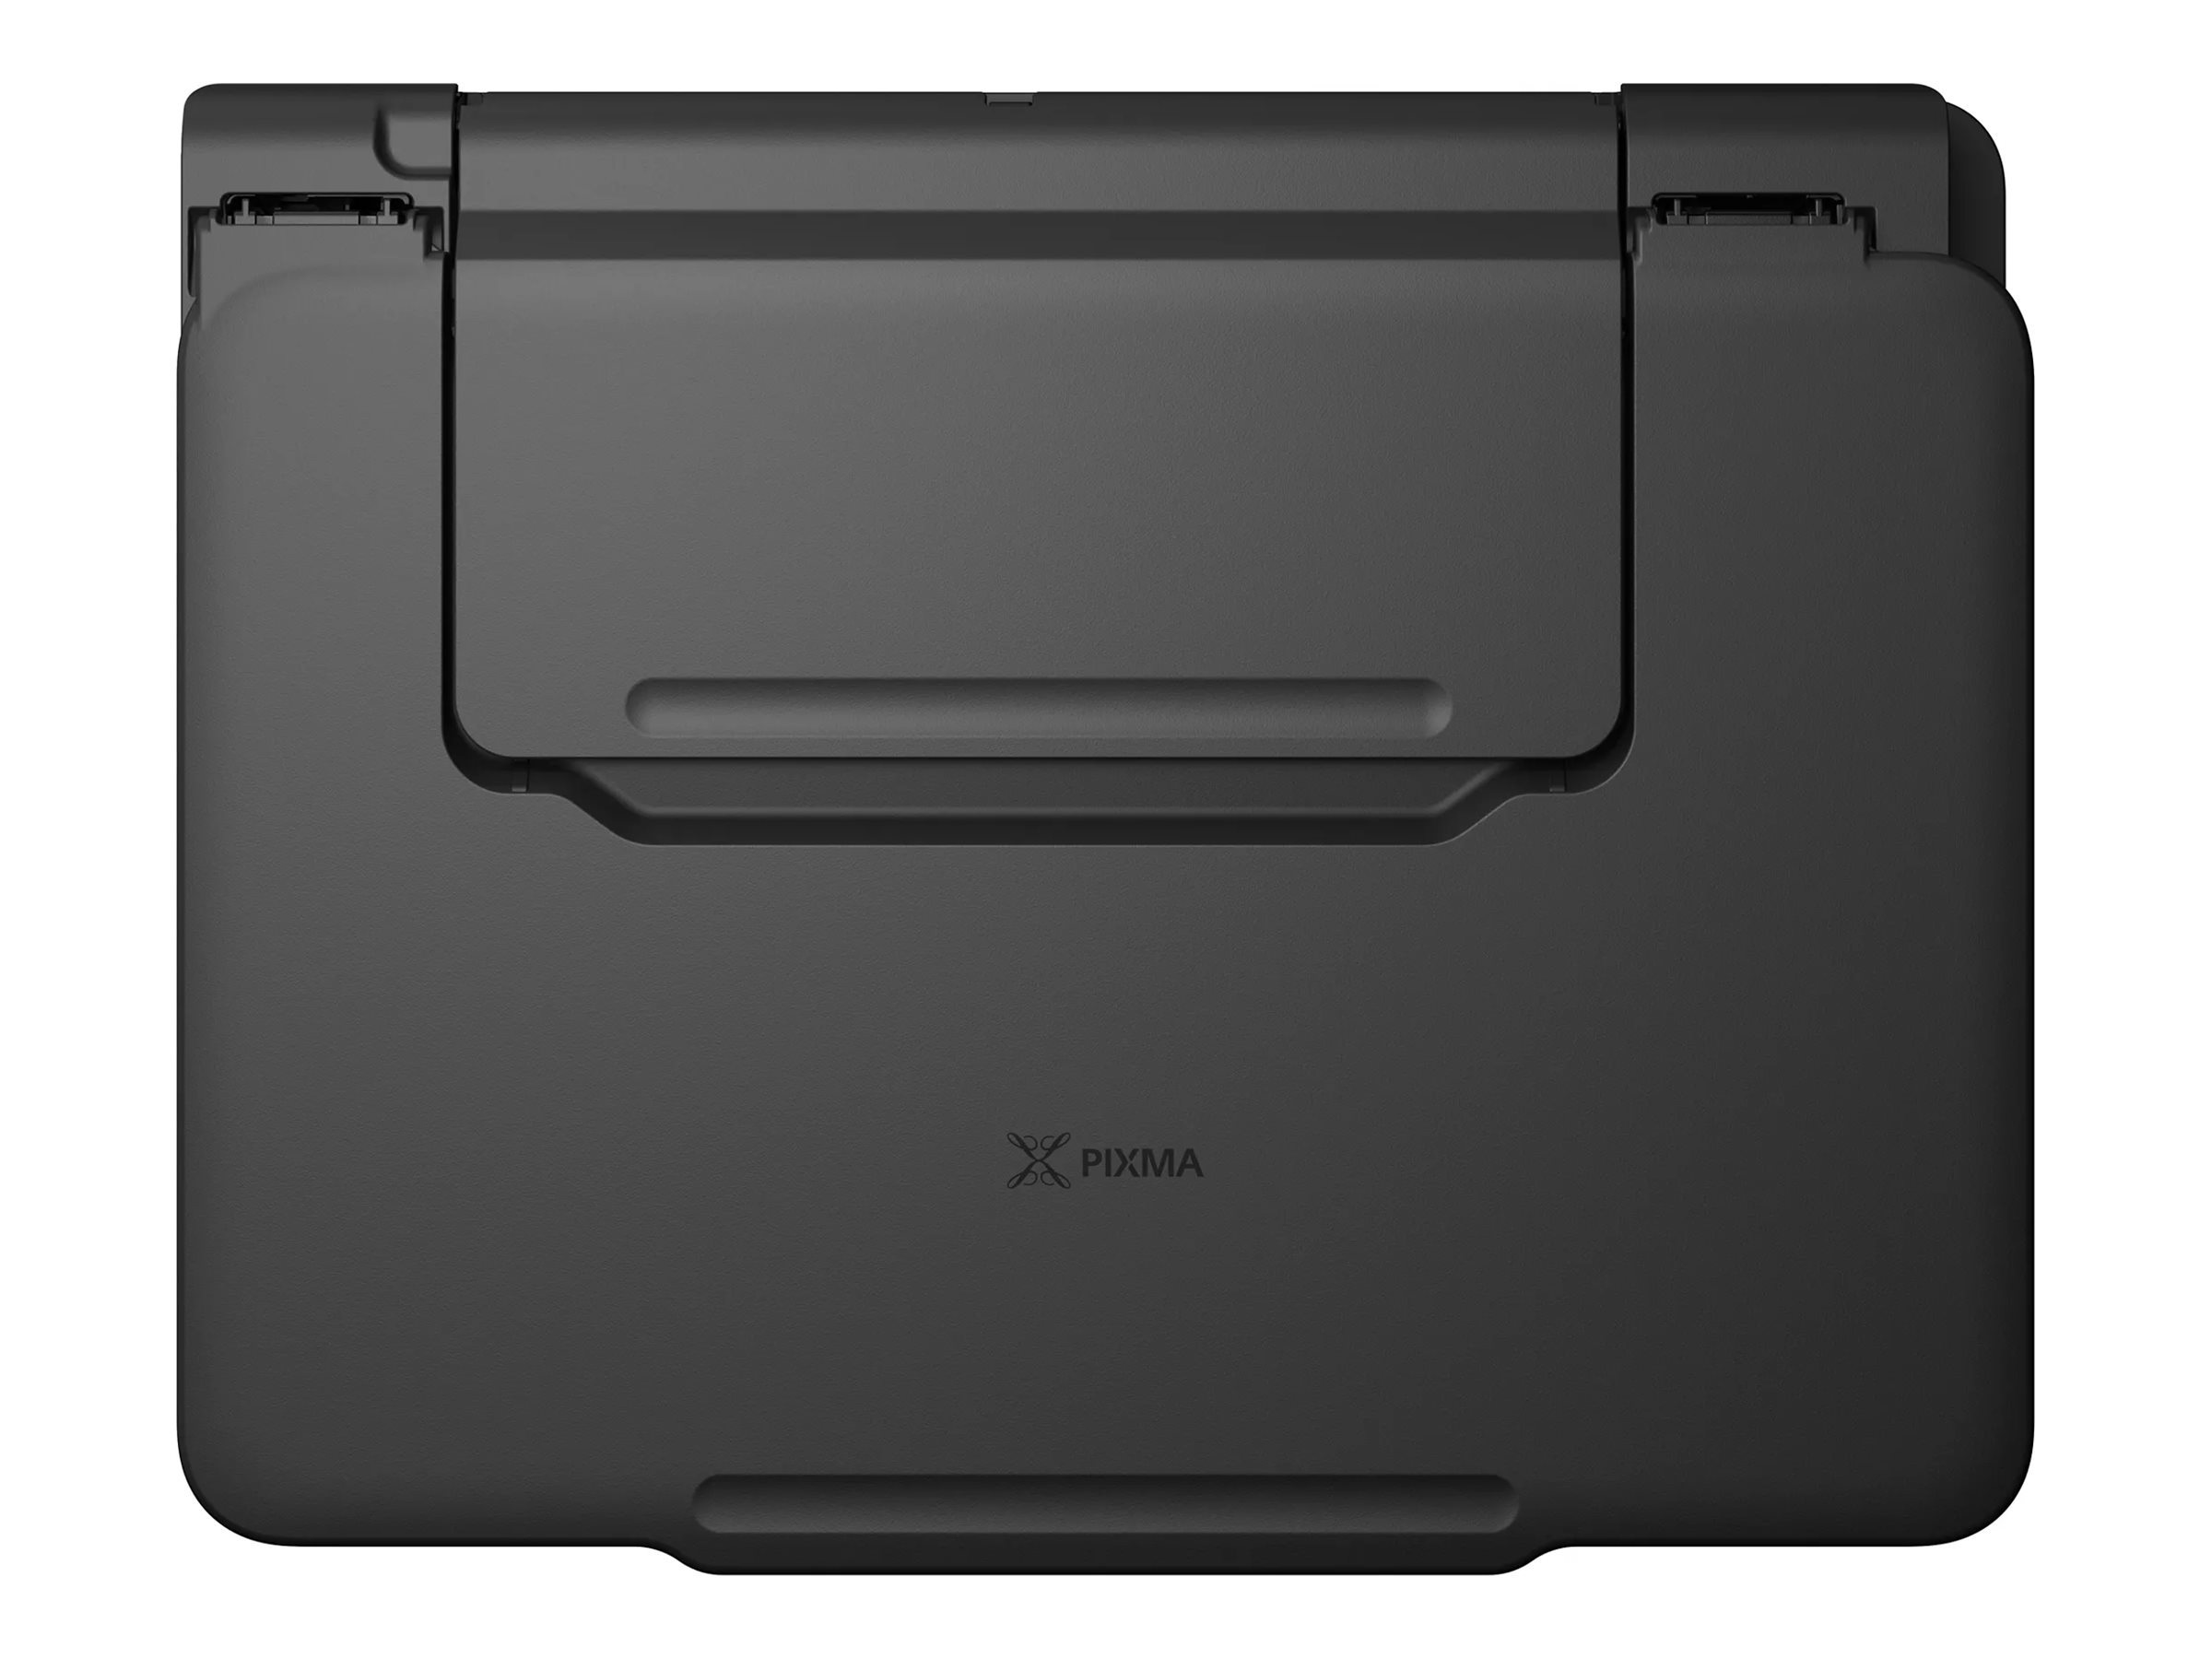 Canon Pixma G3270 Wireless MegaTank All-In-One Printer Review